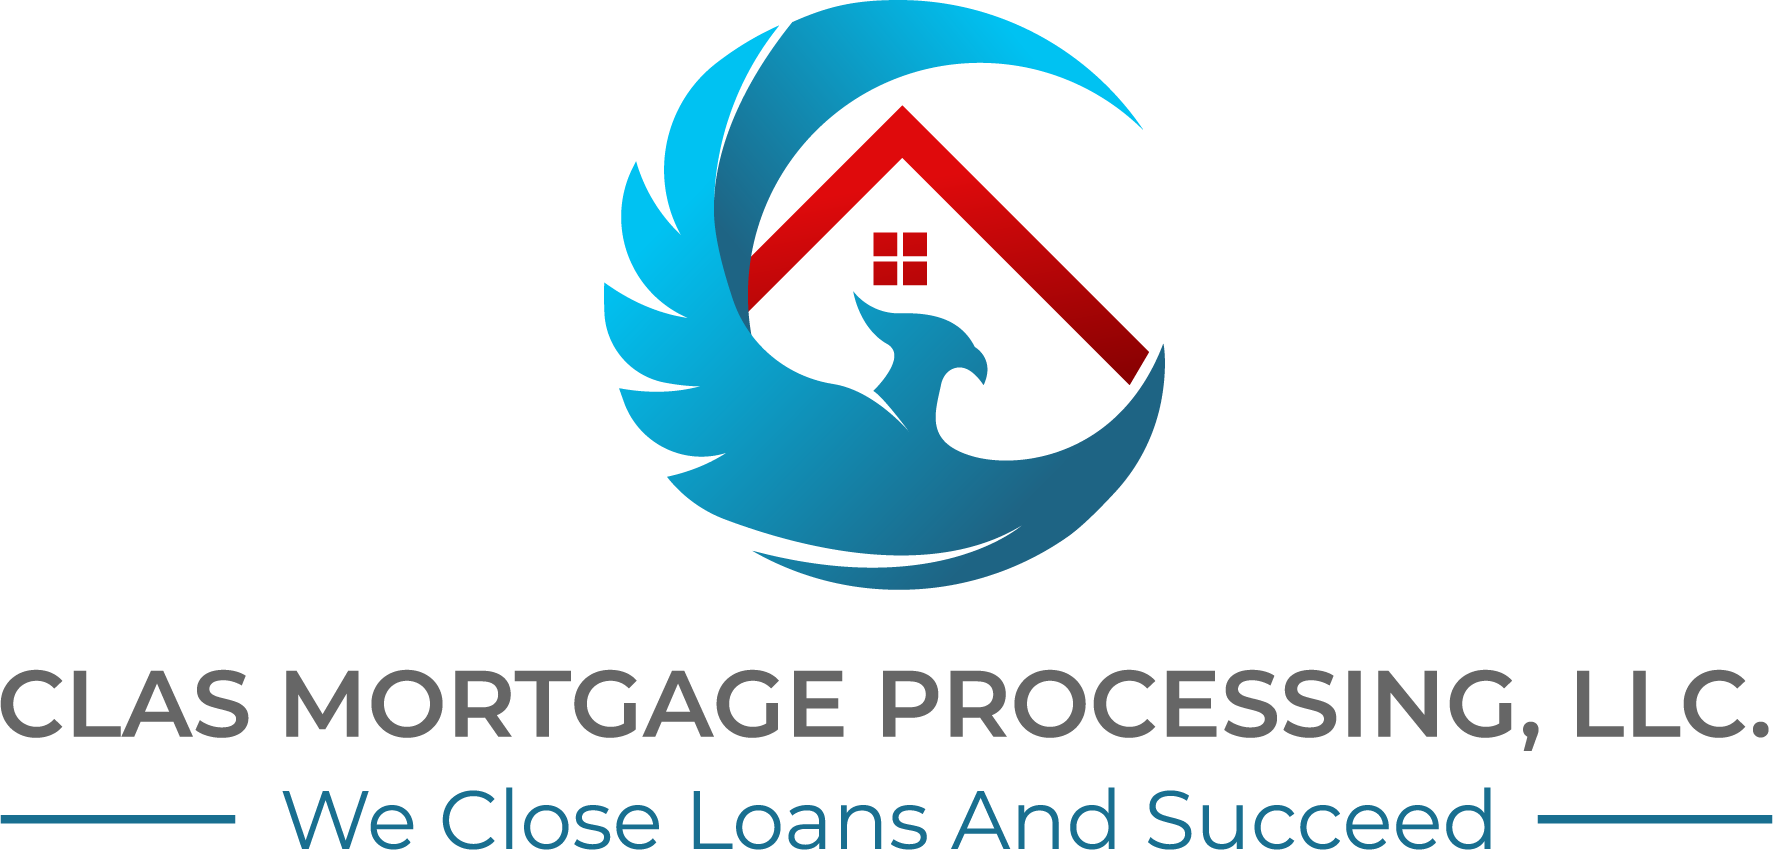 CLAS Mortgage Processing